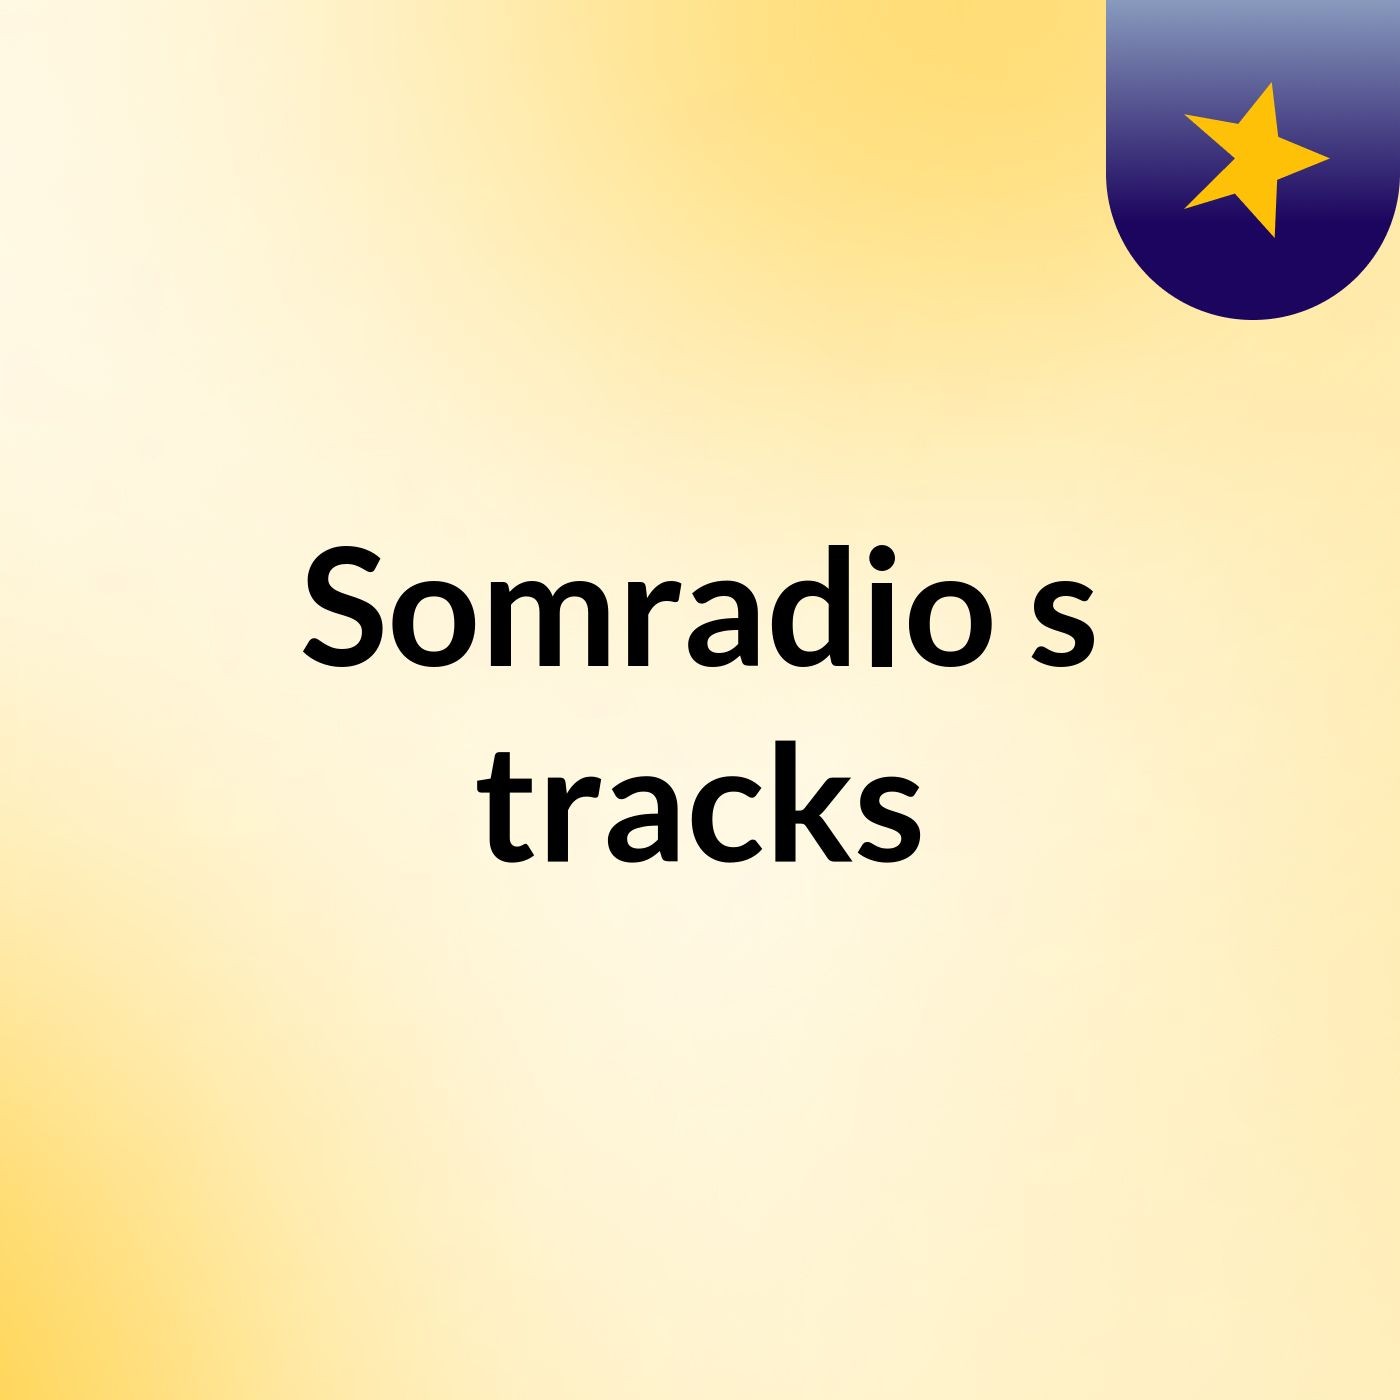 Somradio's tracks